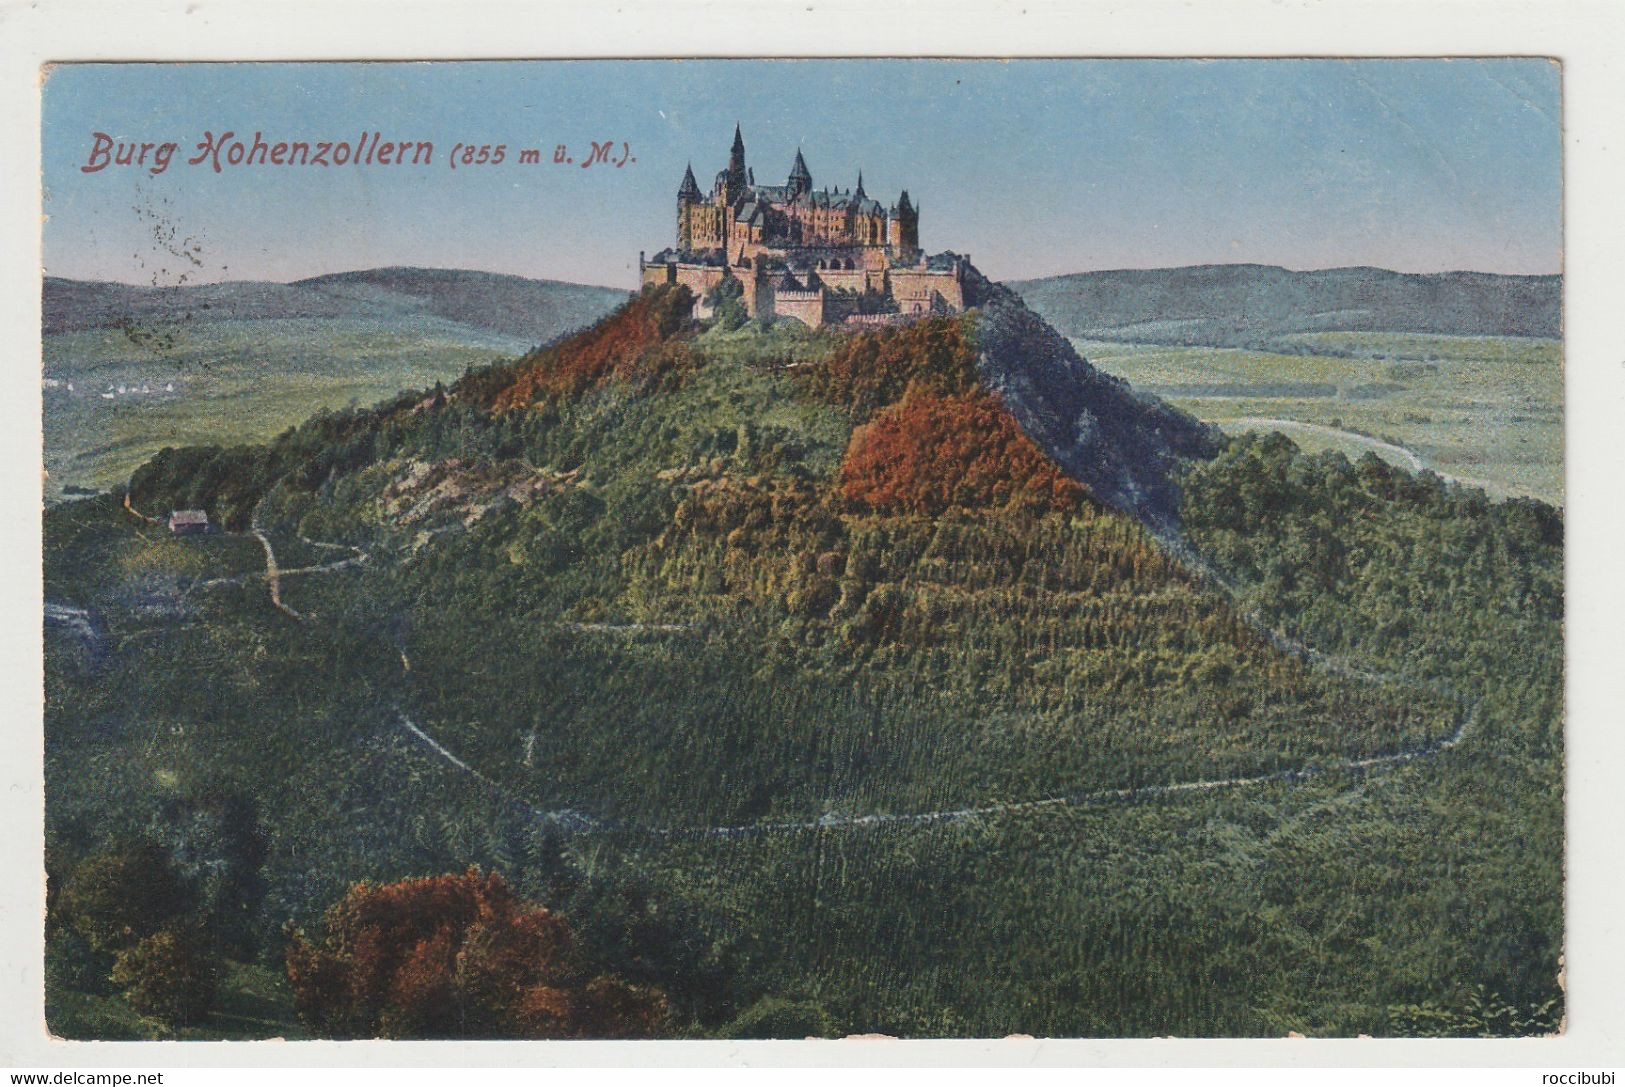 Burg Hohenzollern, Hechingen, Baden-Württemberg - Hechingen